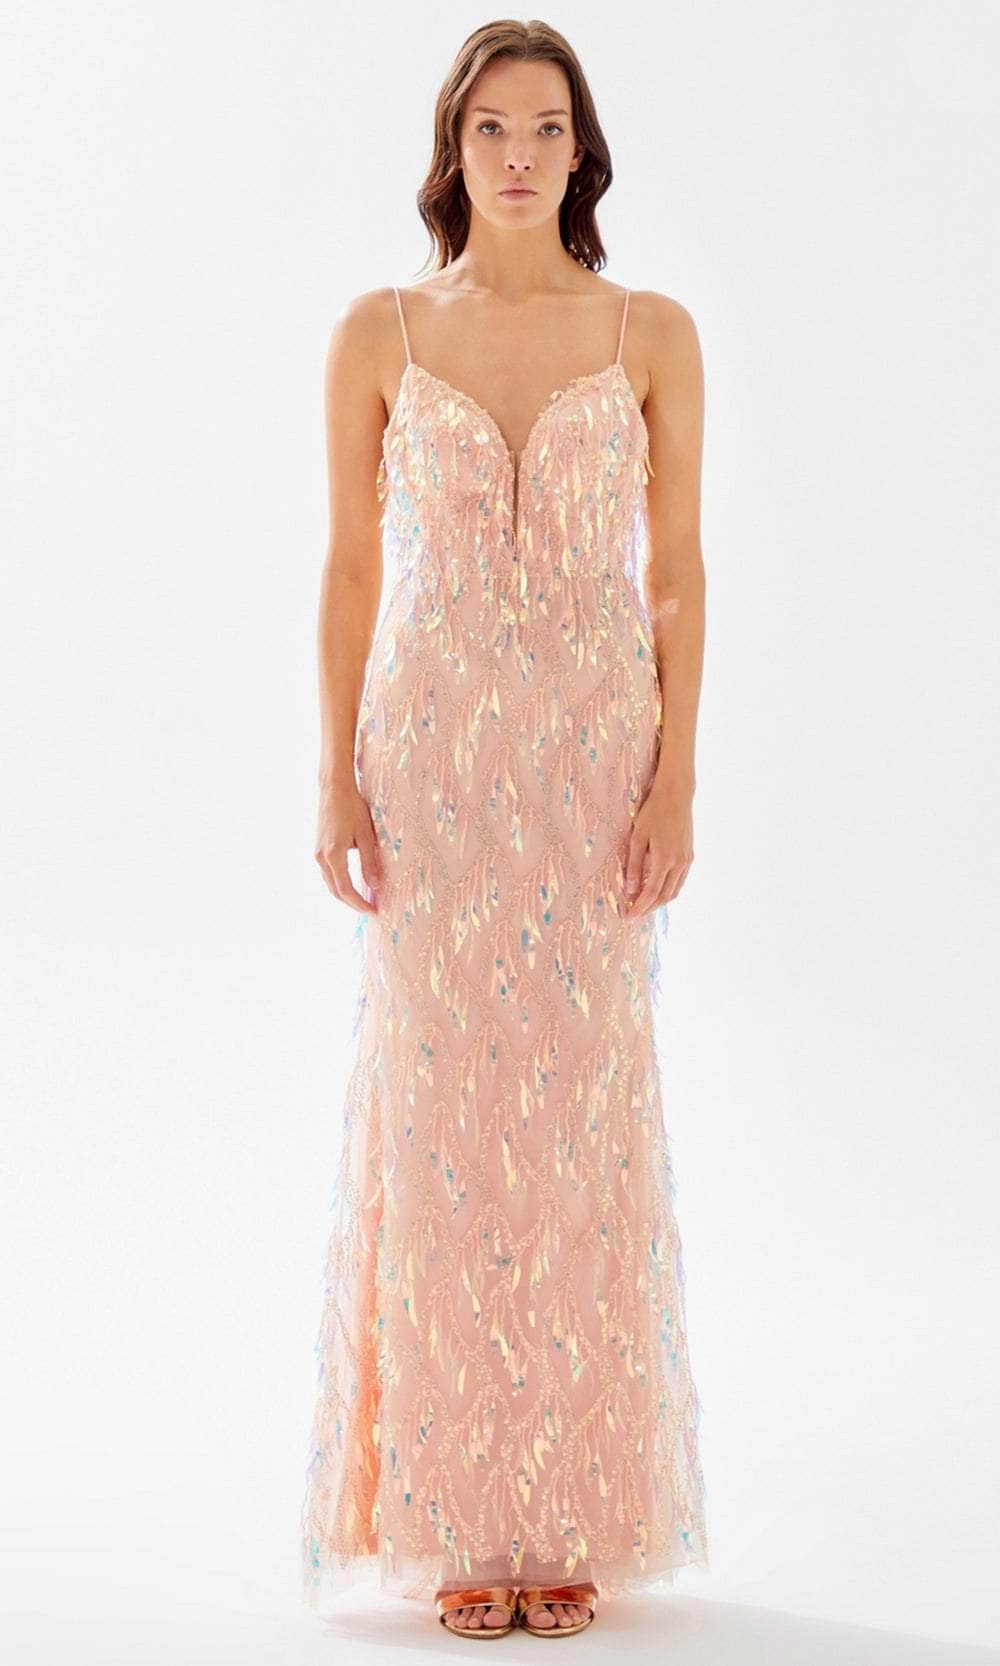 Tarik Ediz 52091 - Wire Thin Strapped Embellished Dress Prom Dresses 00 / Rose Gold